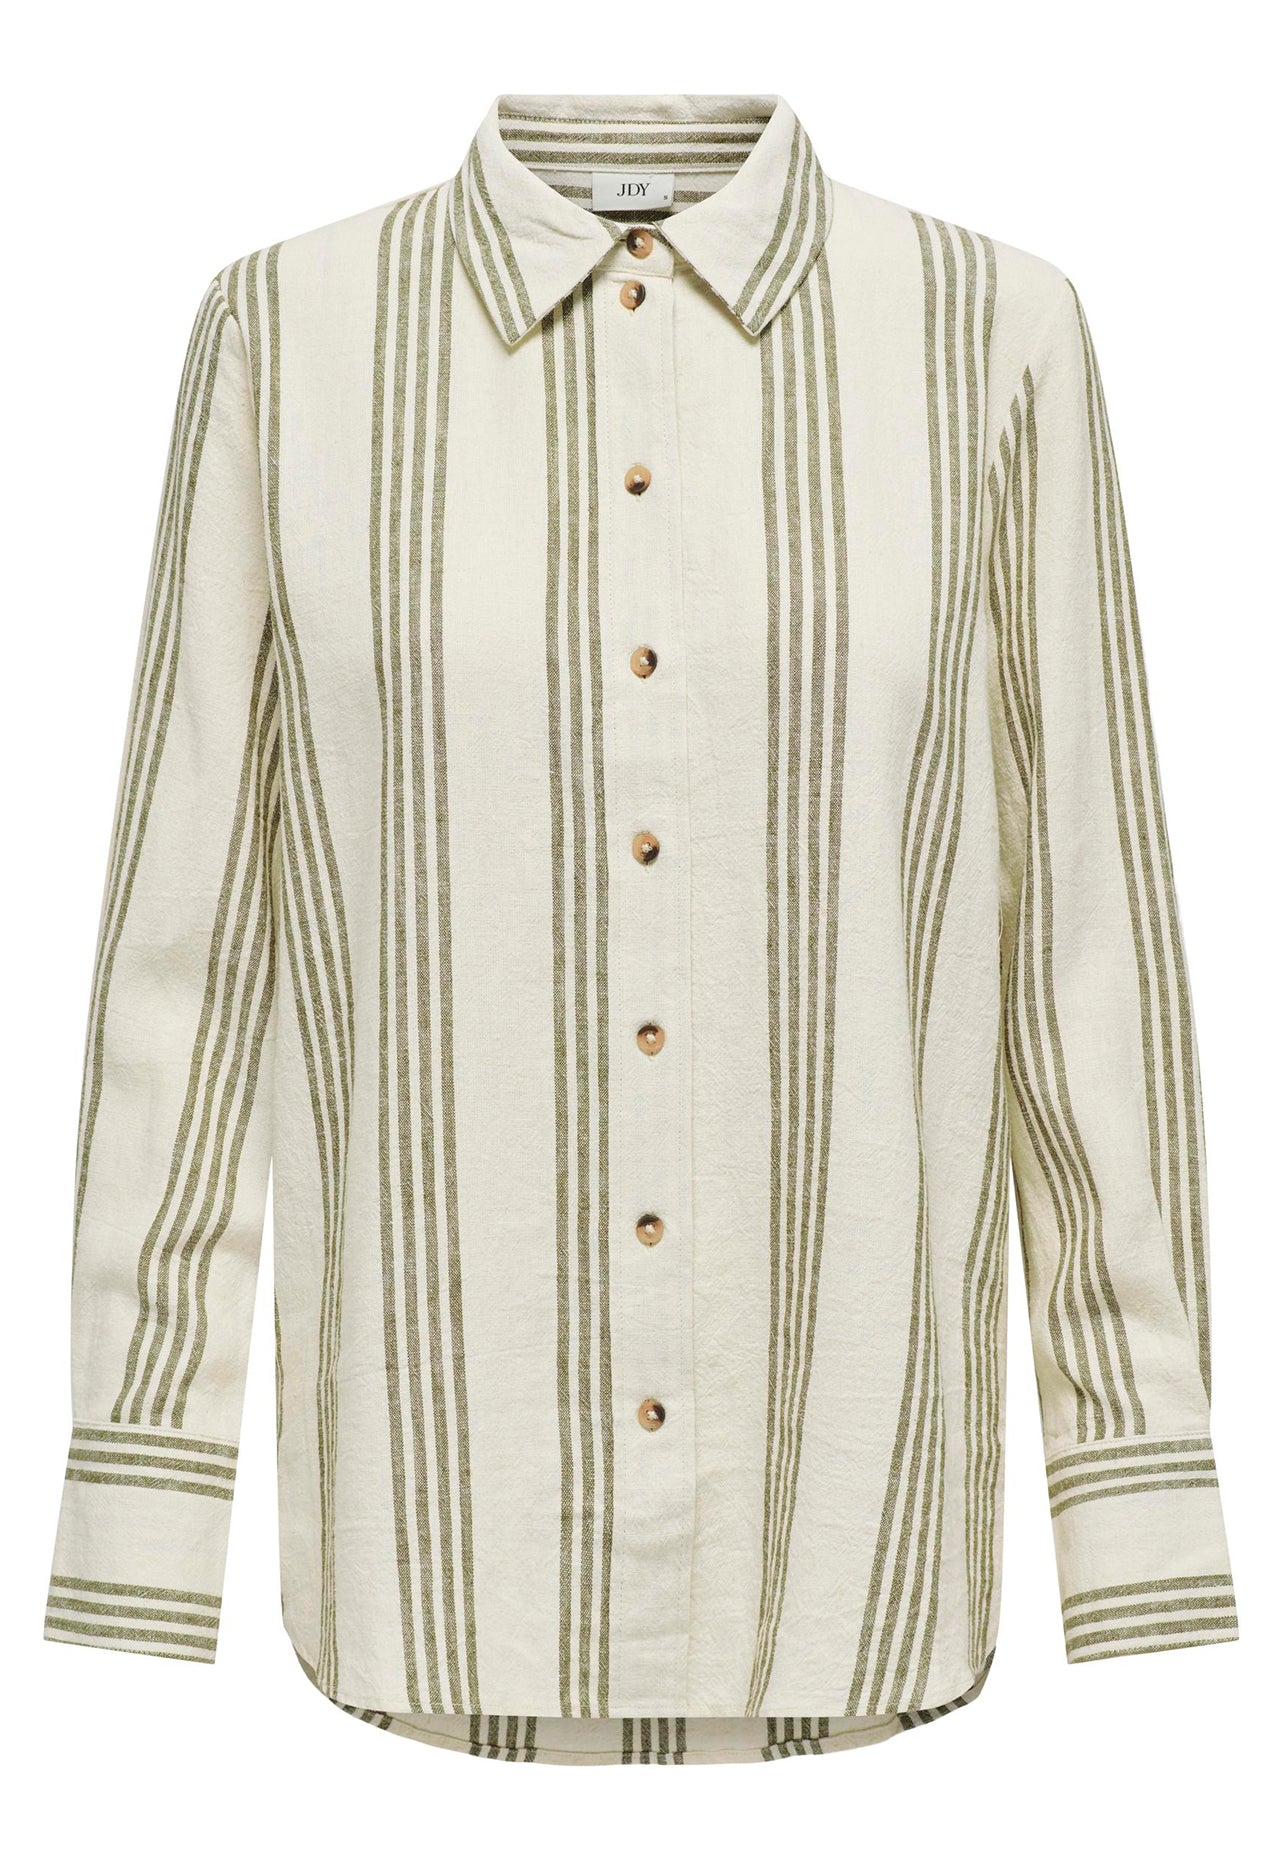 JDY Say Oversized linne Stripe Co-ord skjorta i beige och olivgrön - One Nation-kläder